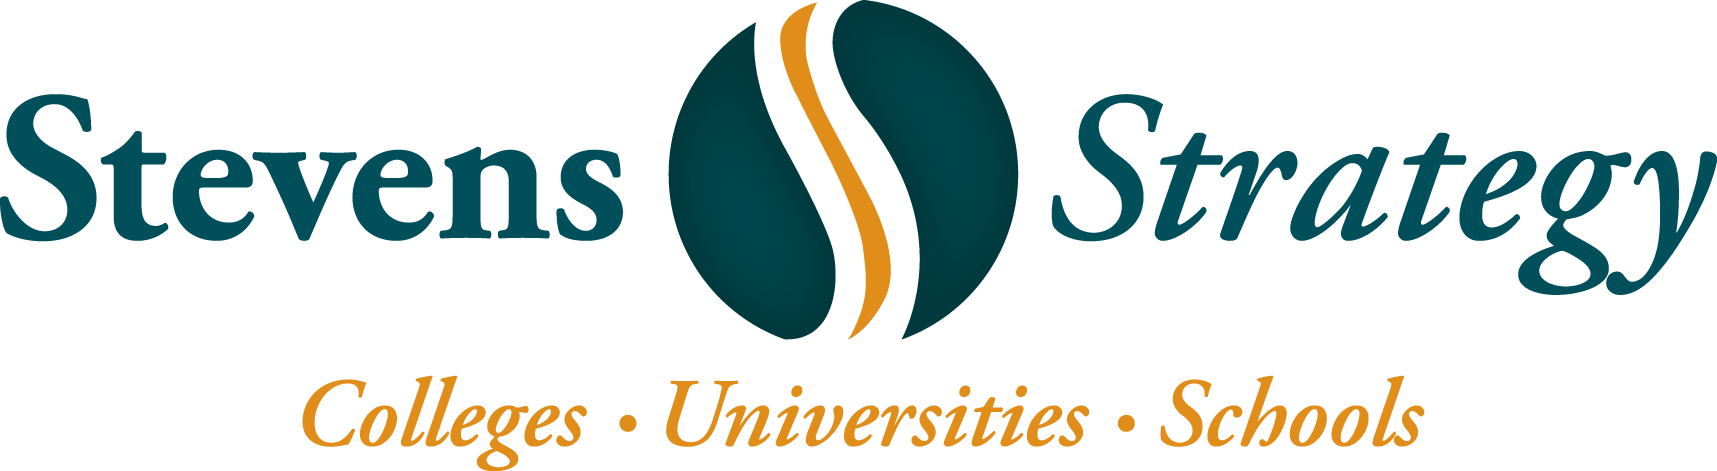 Stevens Strategy logo